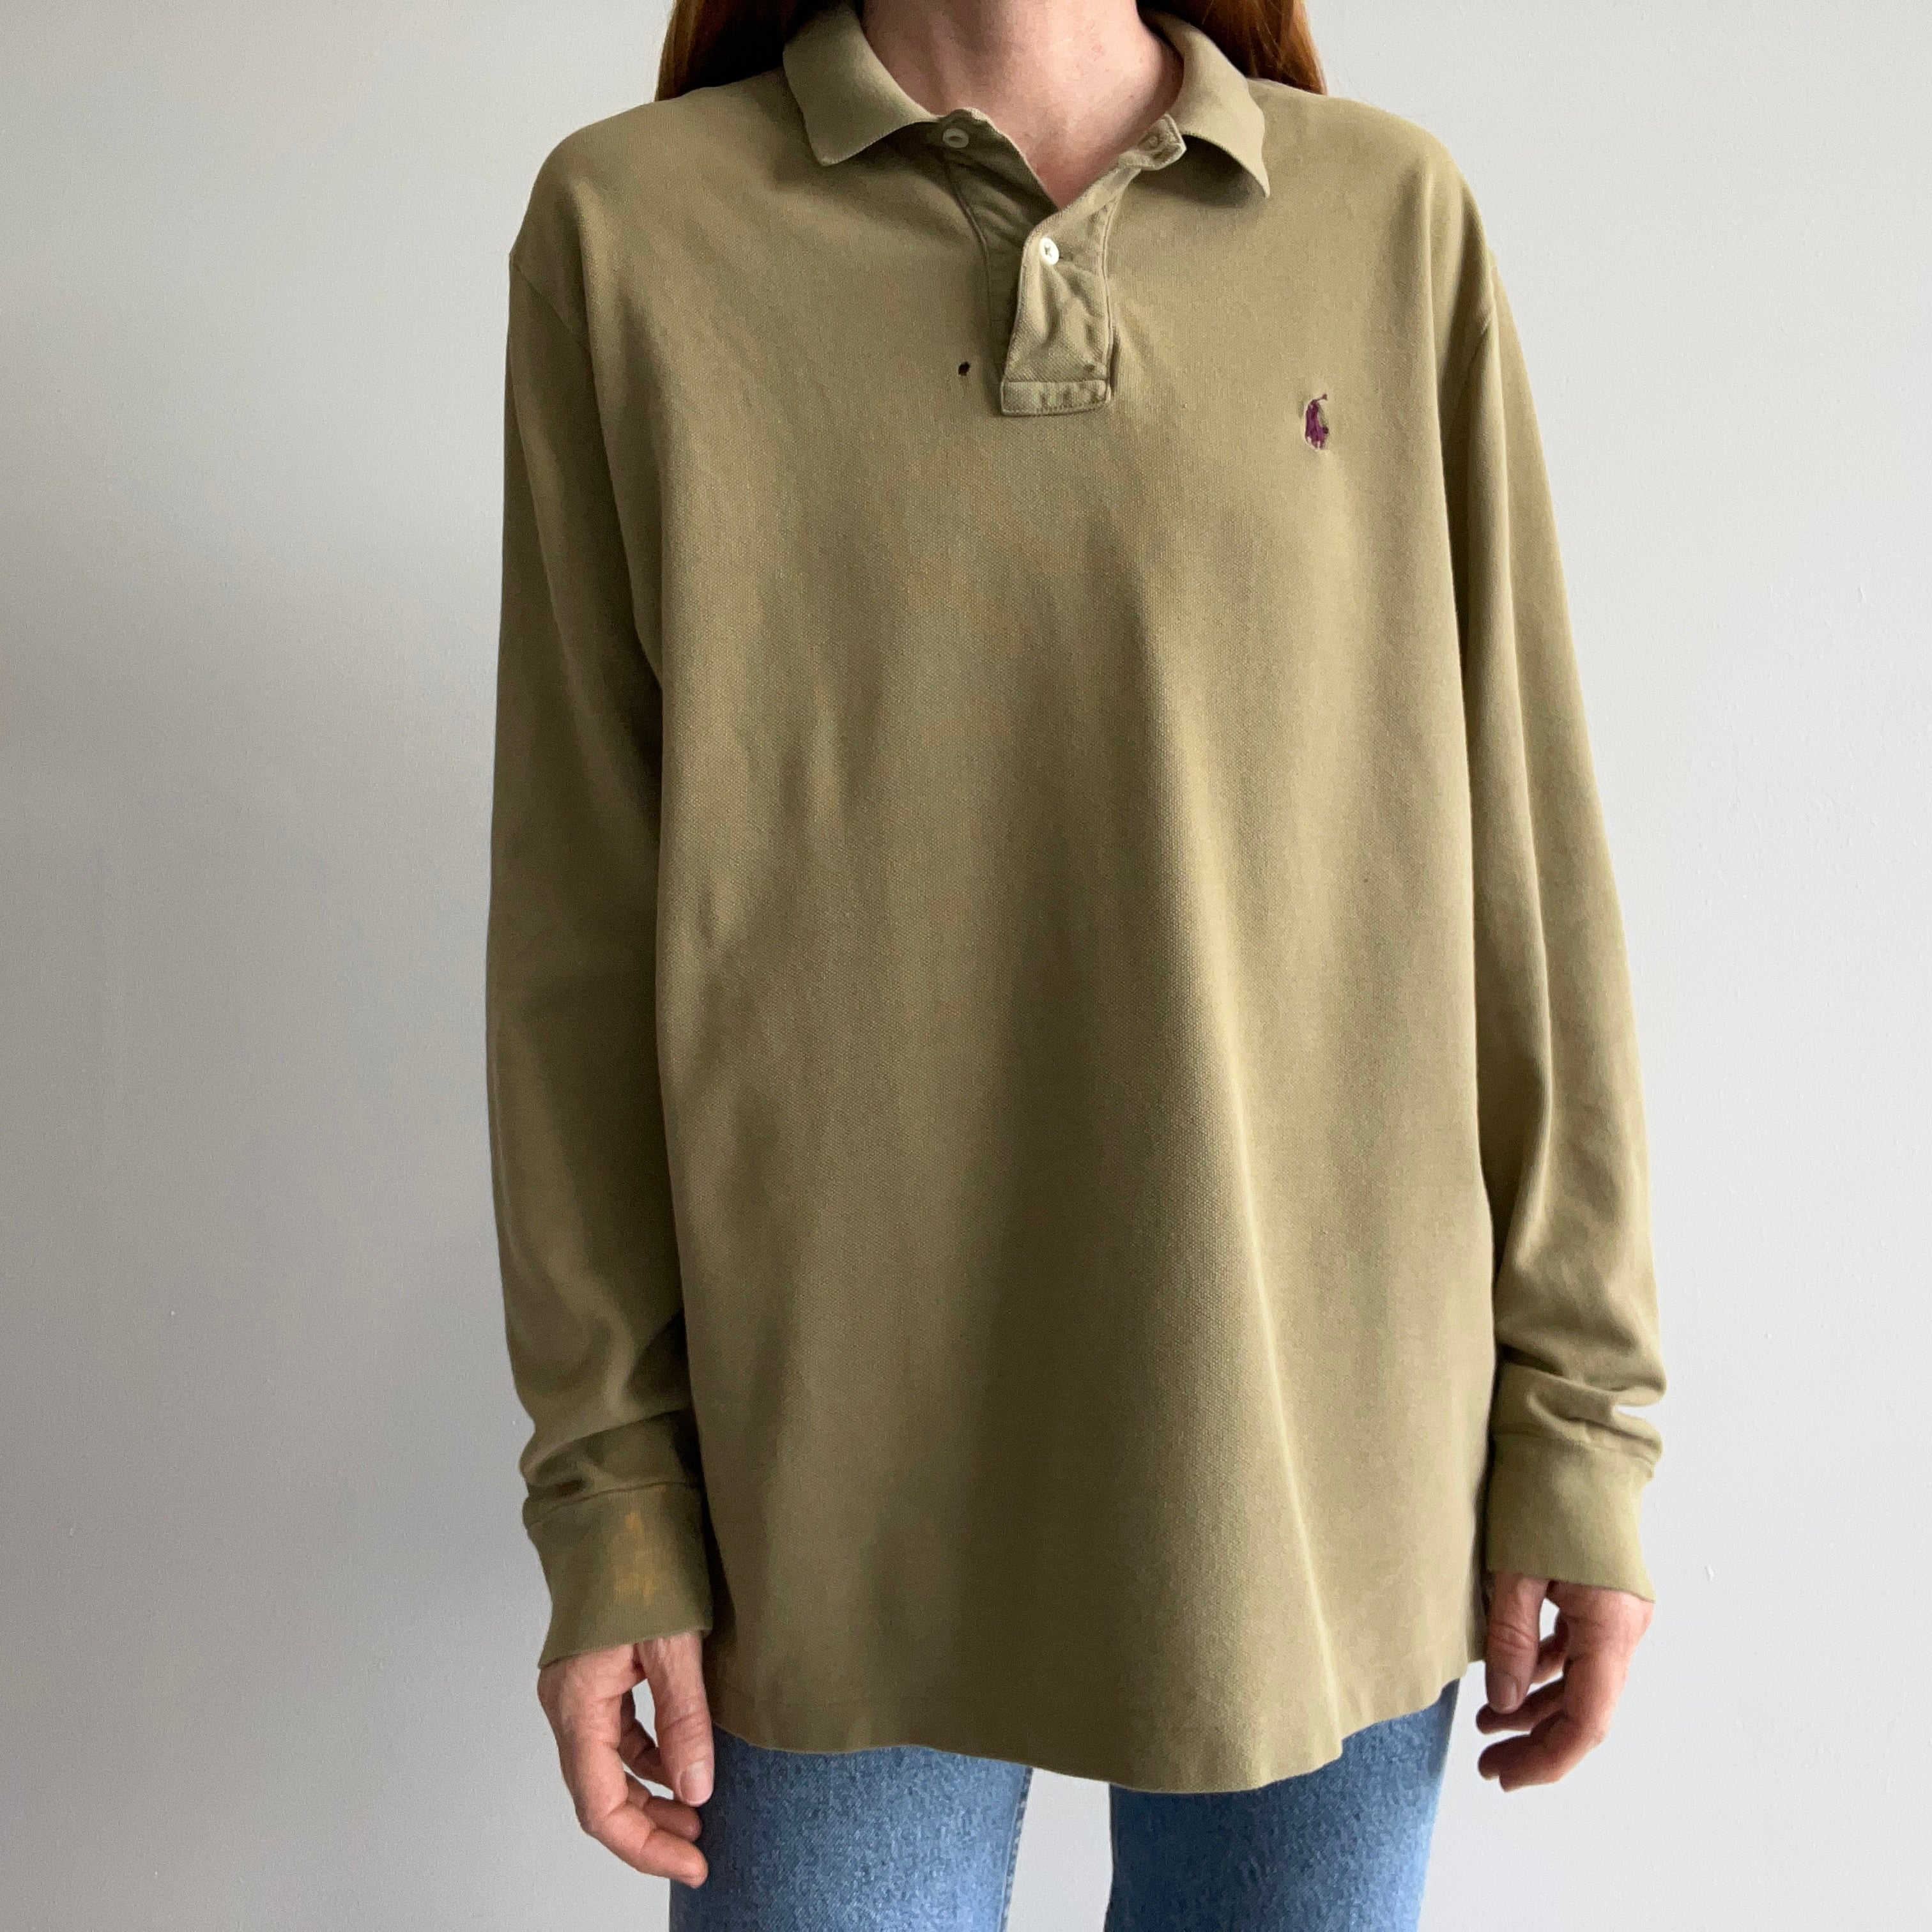 1990/2000s Khaki Ralph Lauren Long Sleeve Polo Shirt with a Single